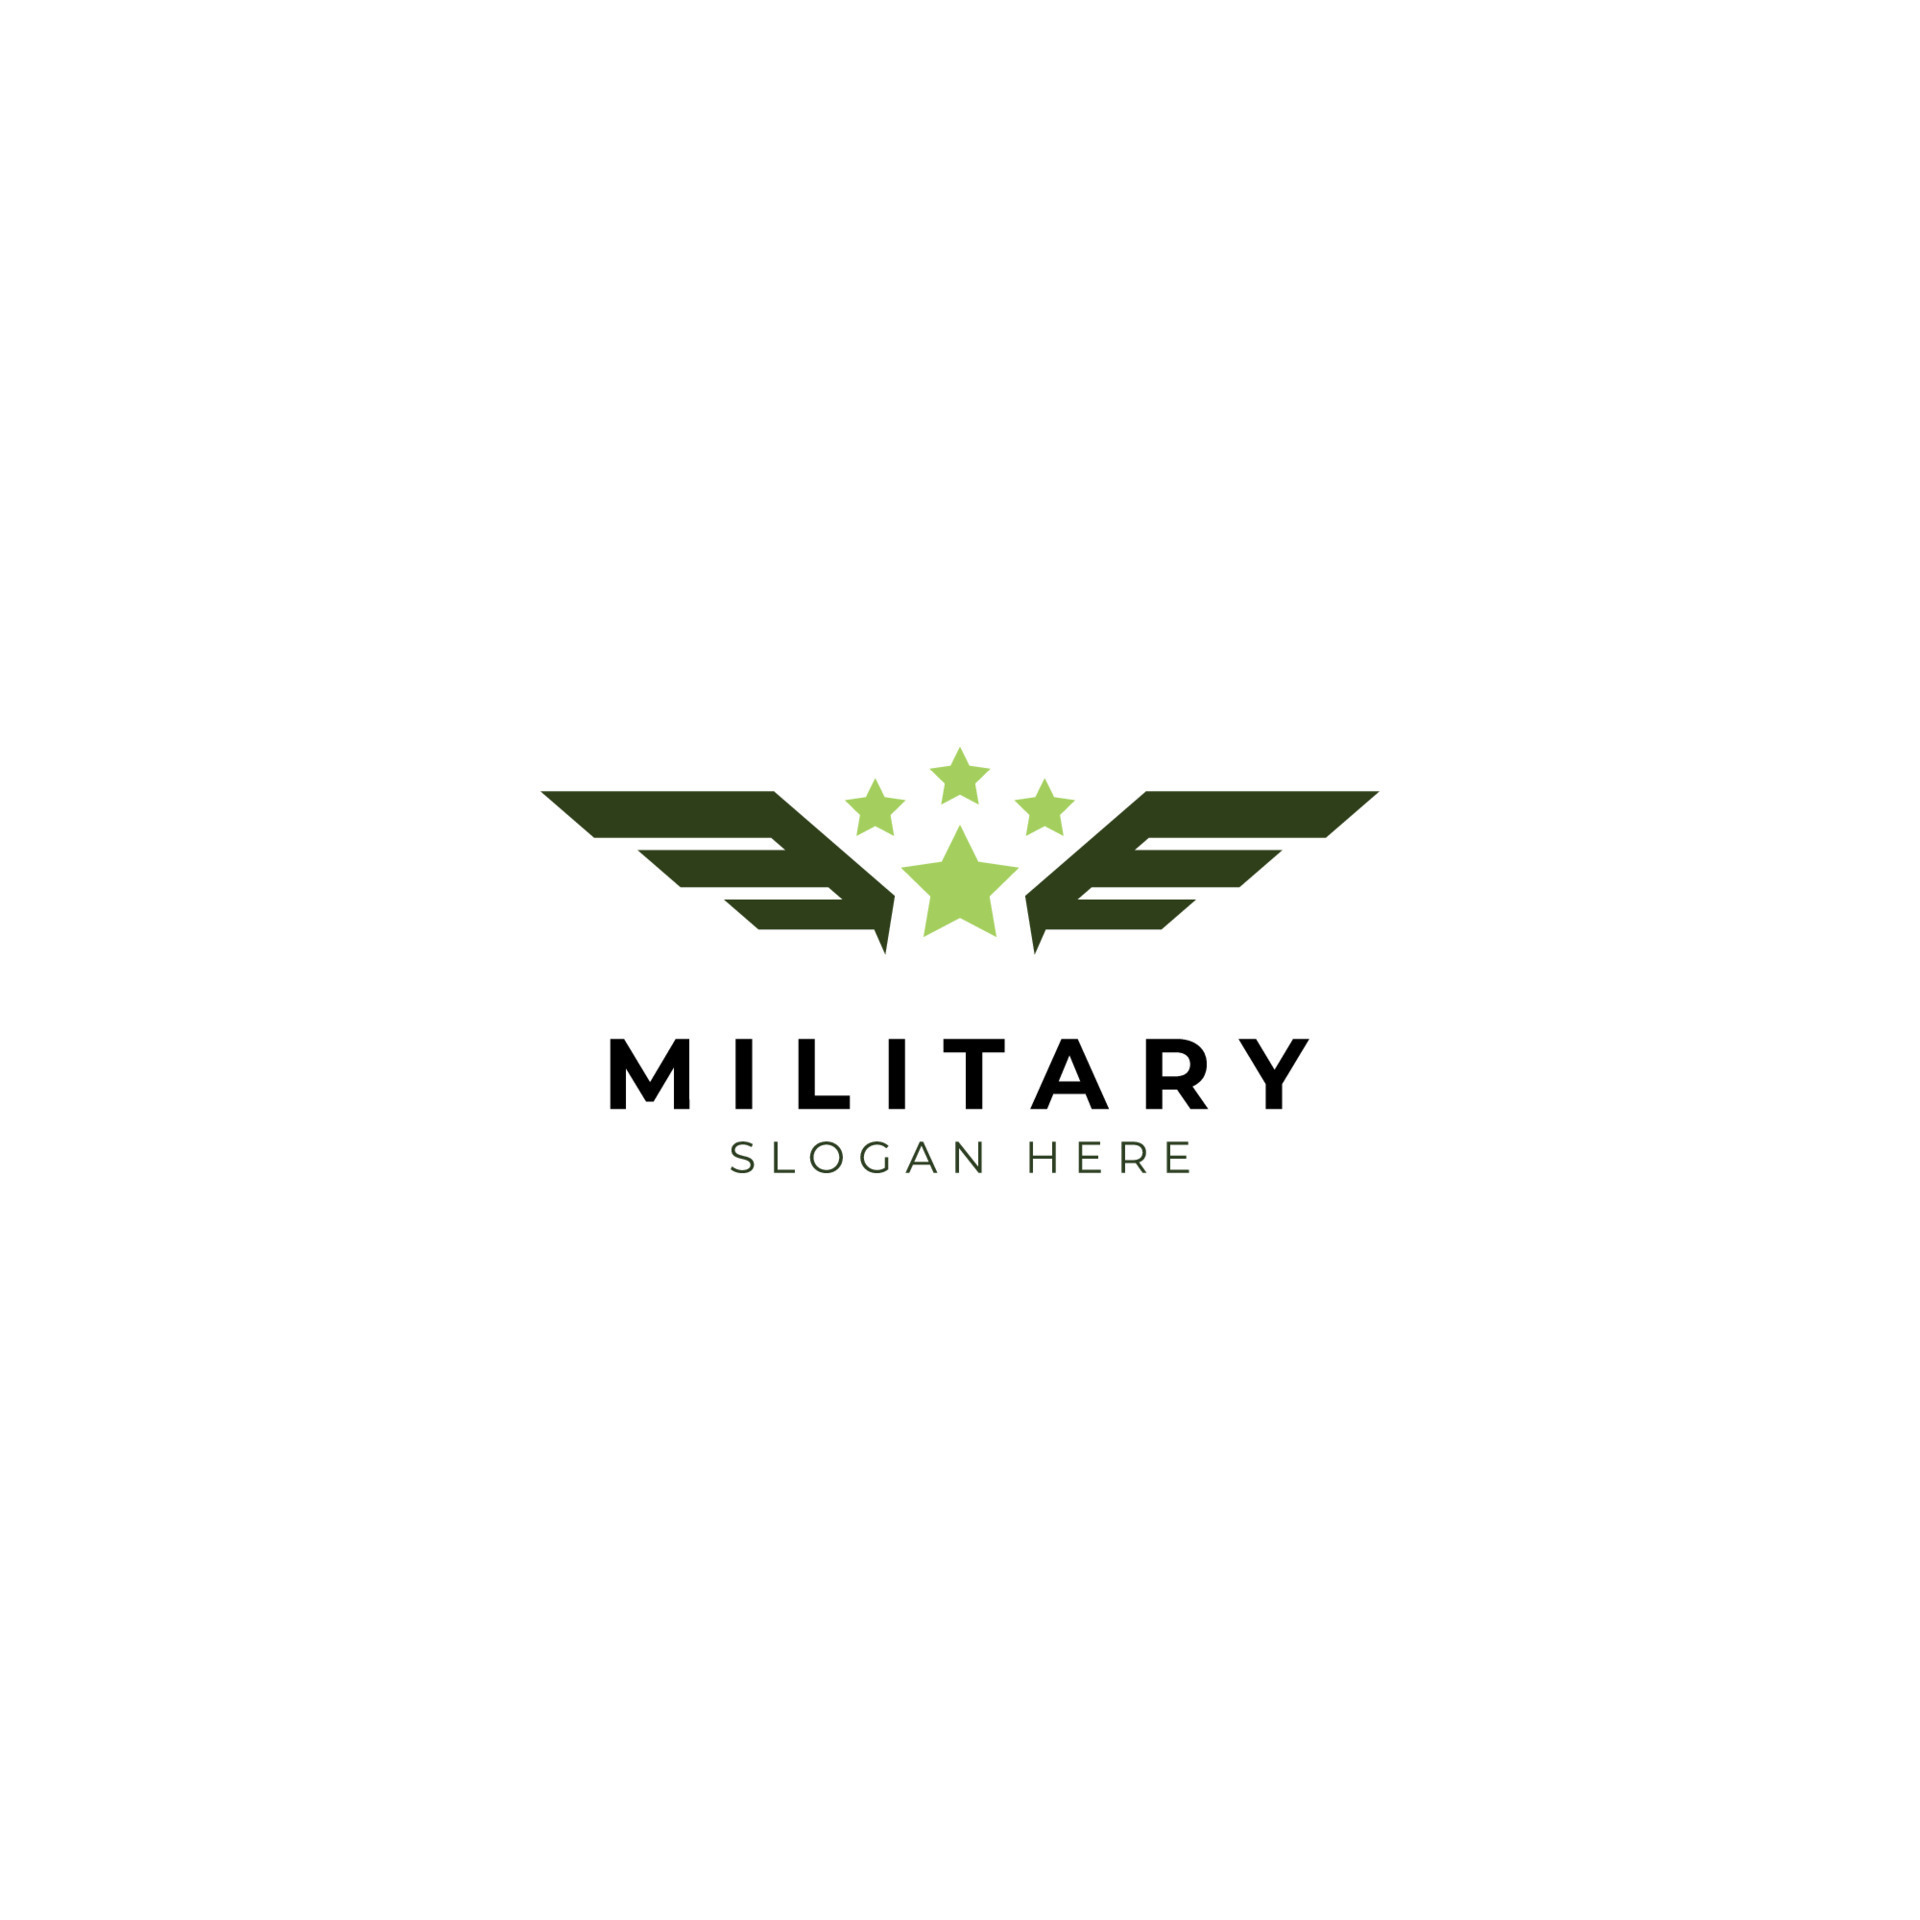 https://static.vecteezy.com/ti/gratis-vektor/p3/7795184-armee-militar-emblem-abzeichen-logo-vorlage-vektor.jpg